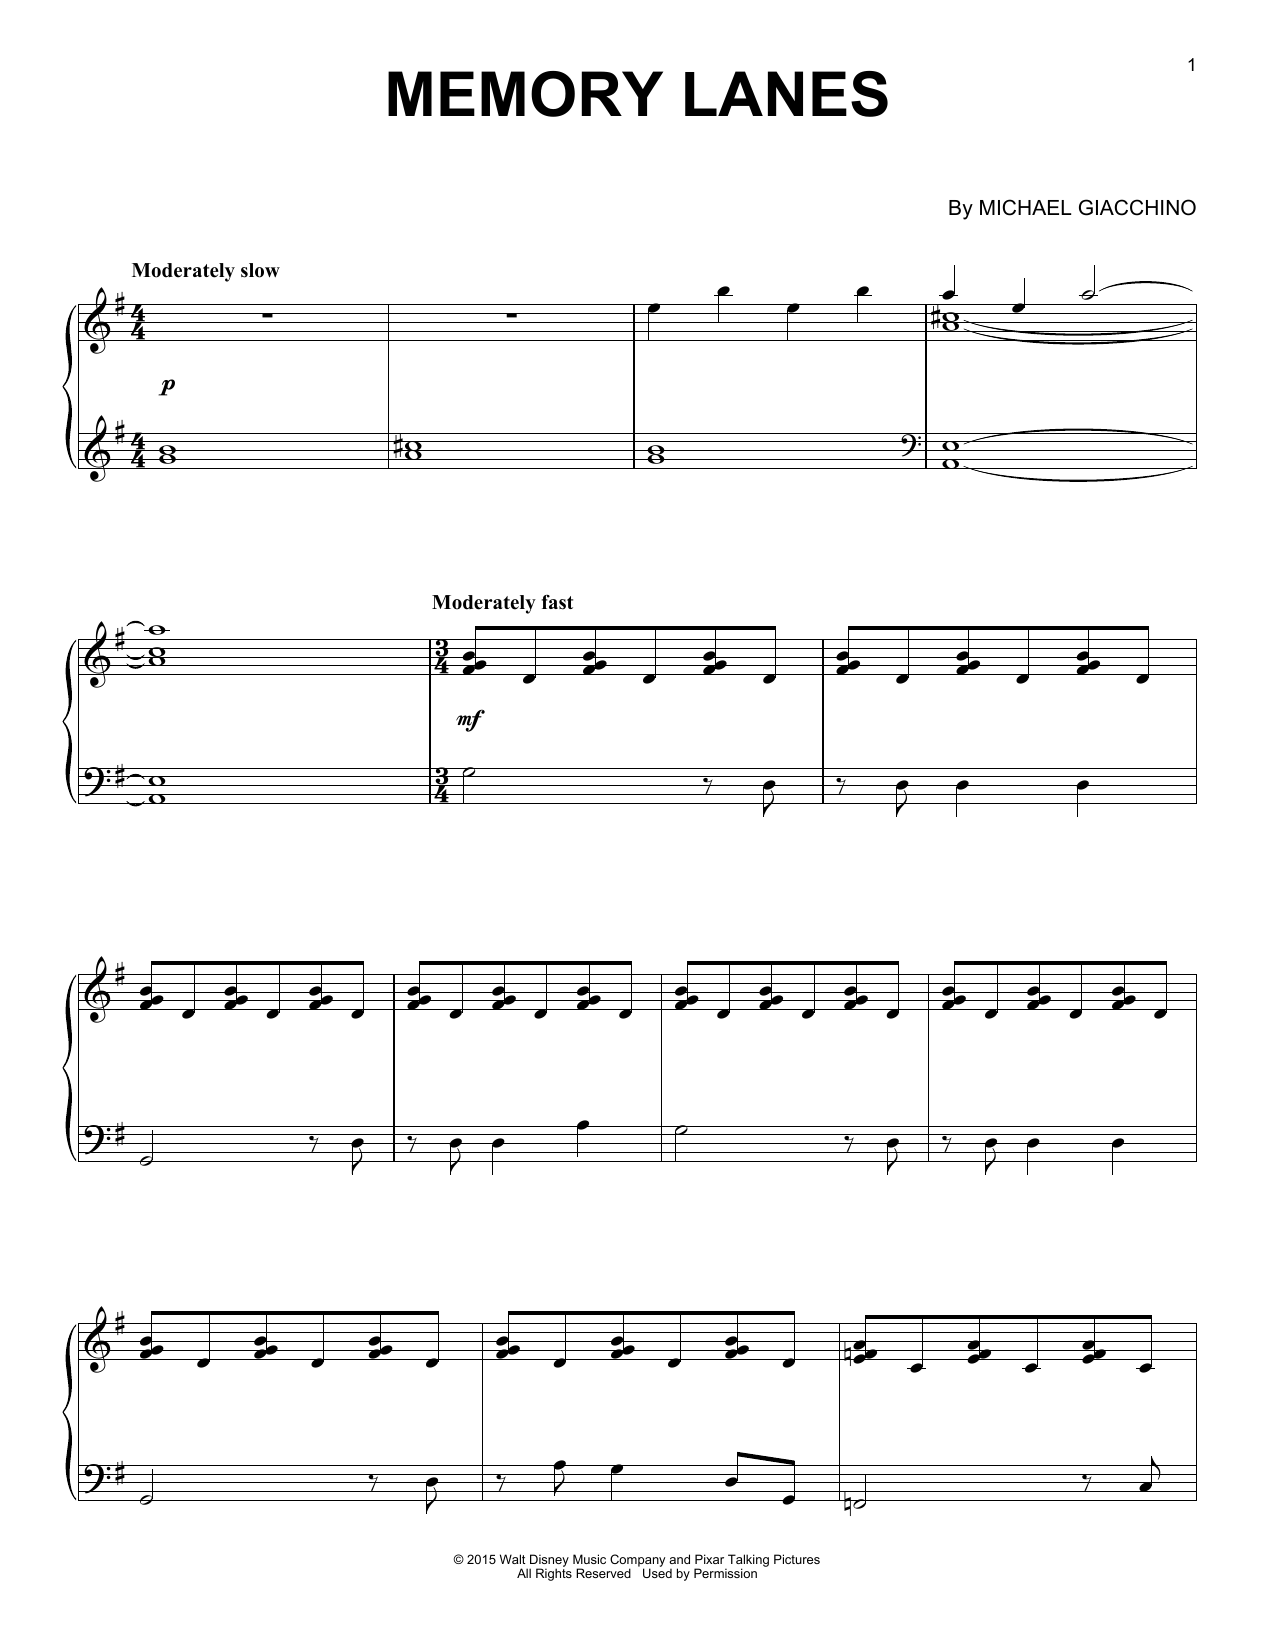 Michael Giacchino Memory Lanes Sheet Music Notes & Chords for Piano - Download or Print PDF